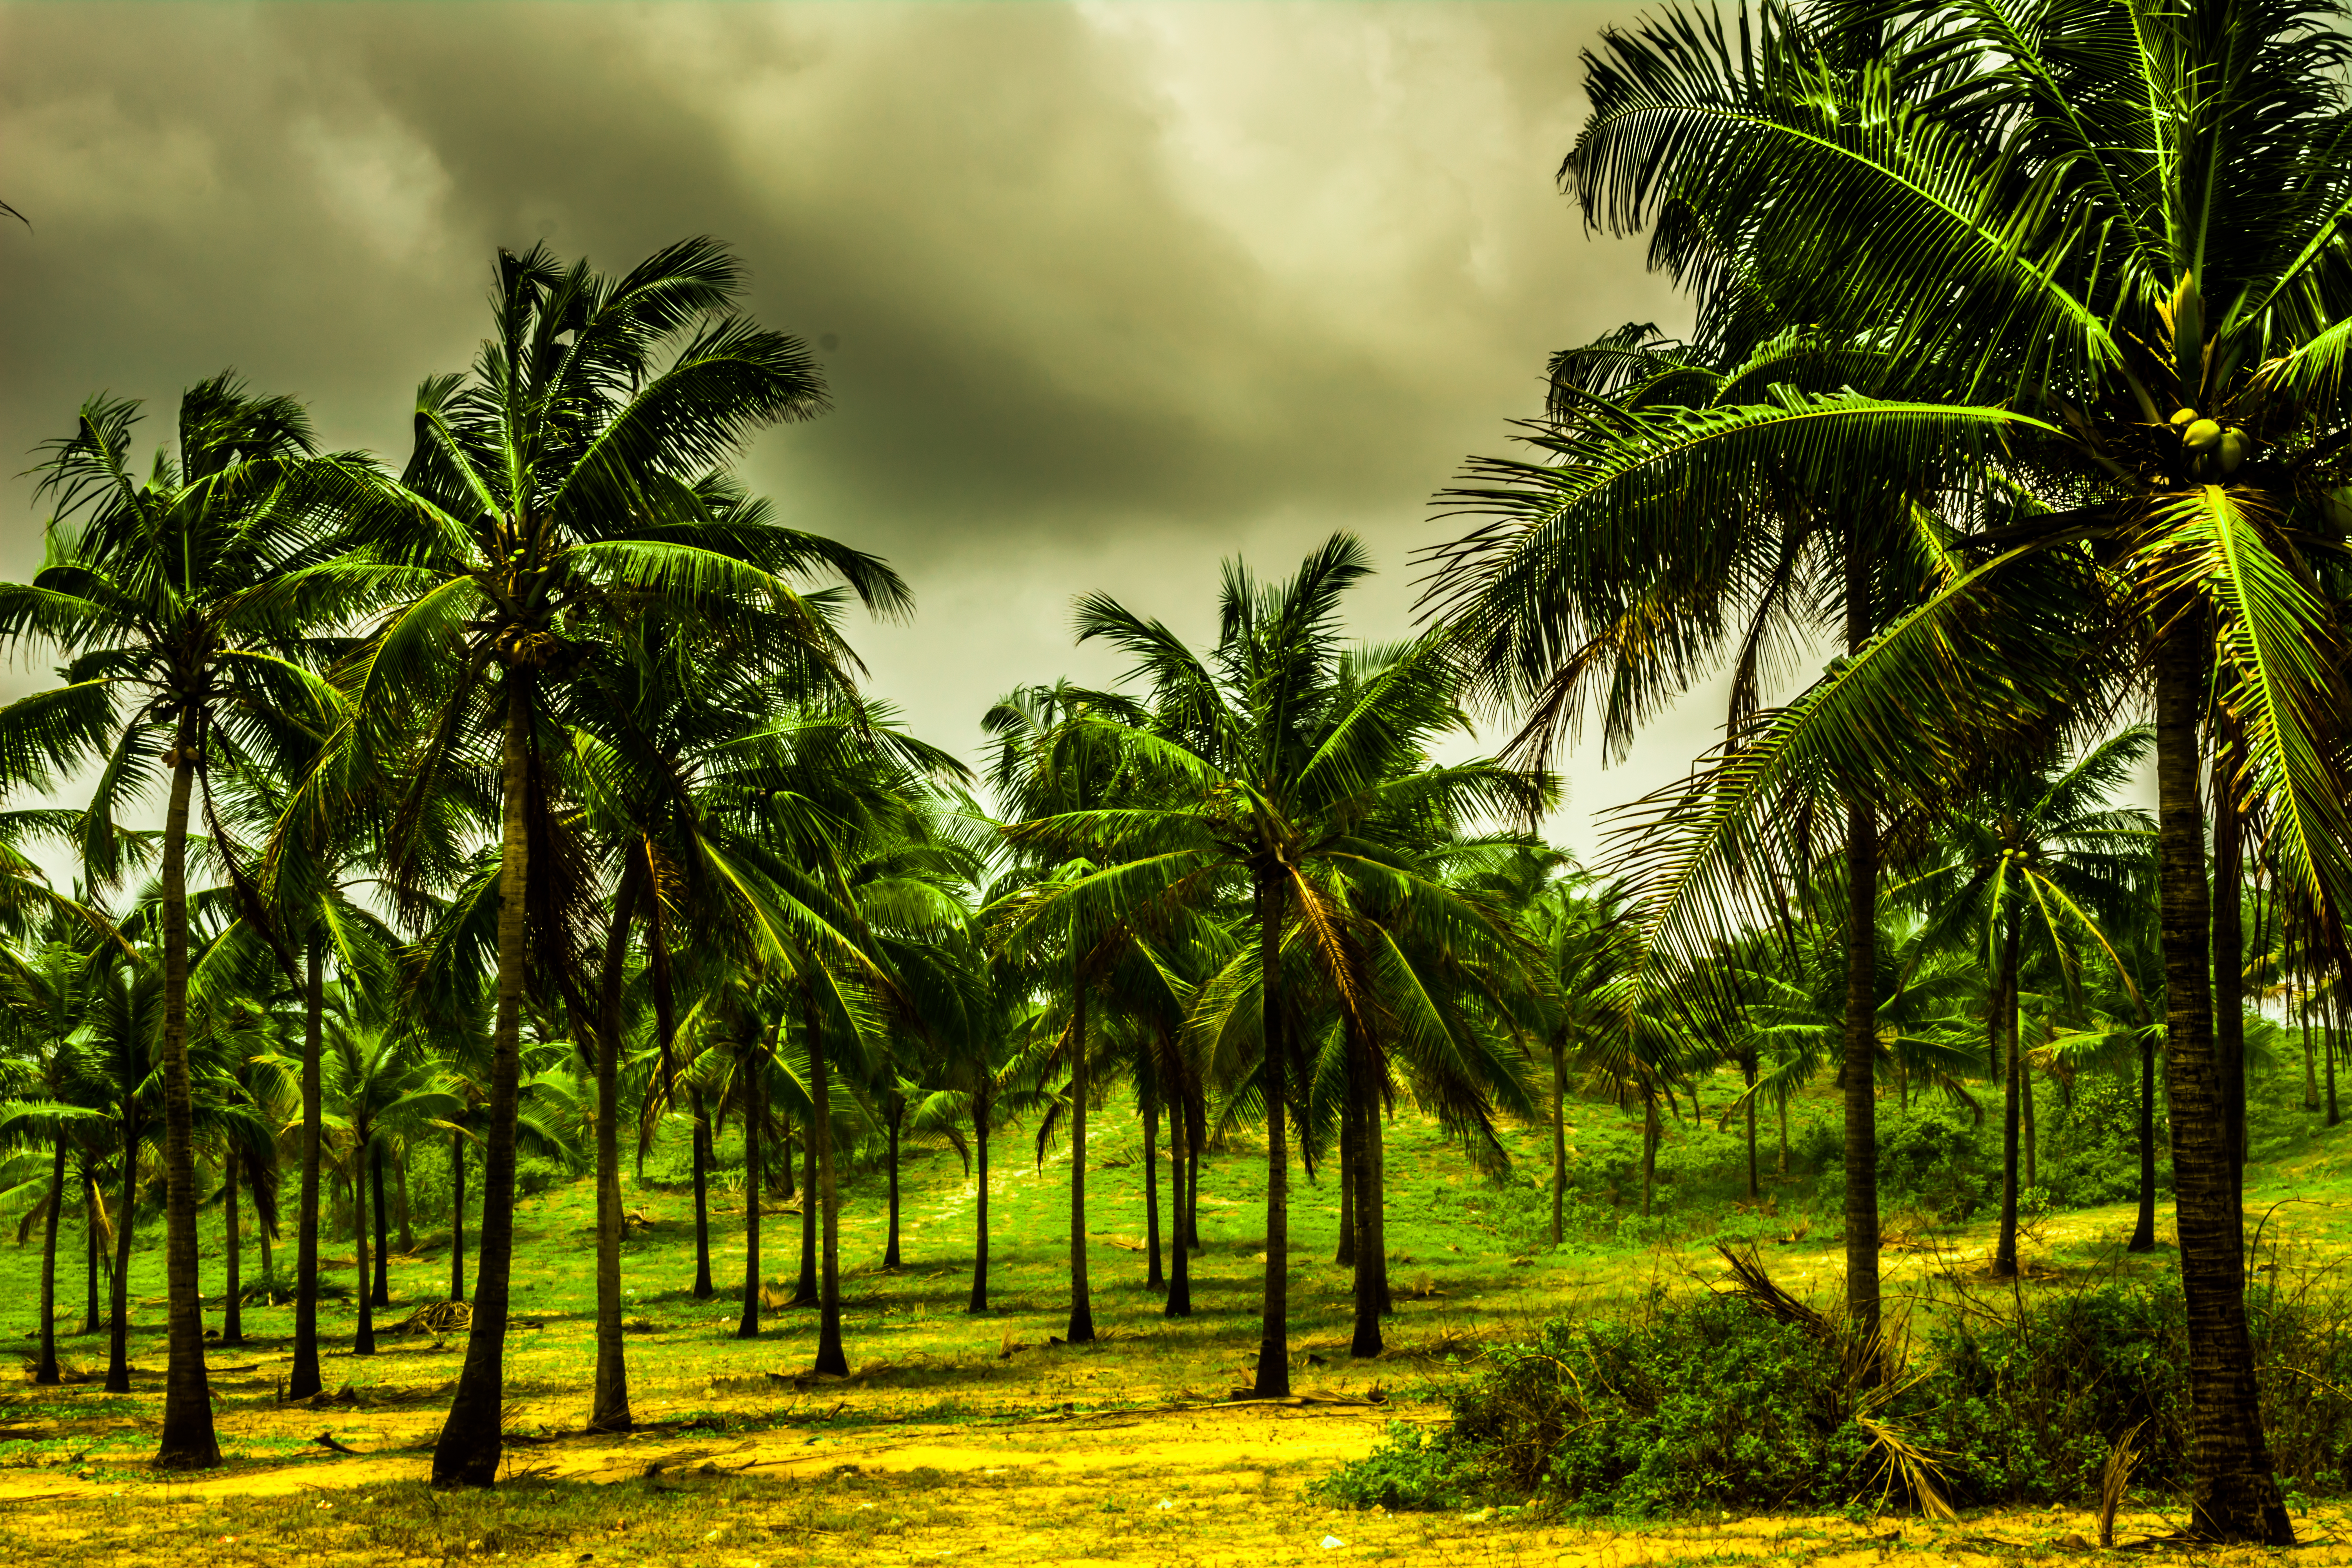 File:Goa Coconut tree.jpg - Wikimedia Commons